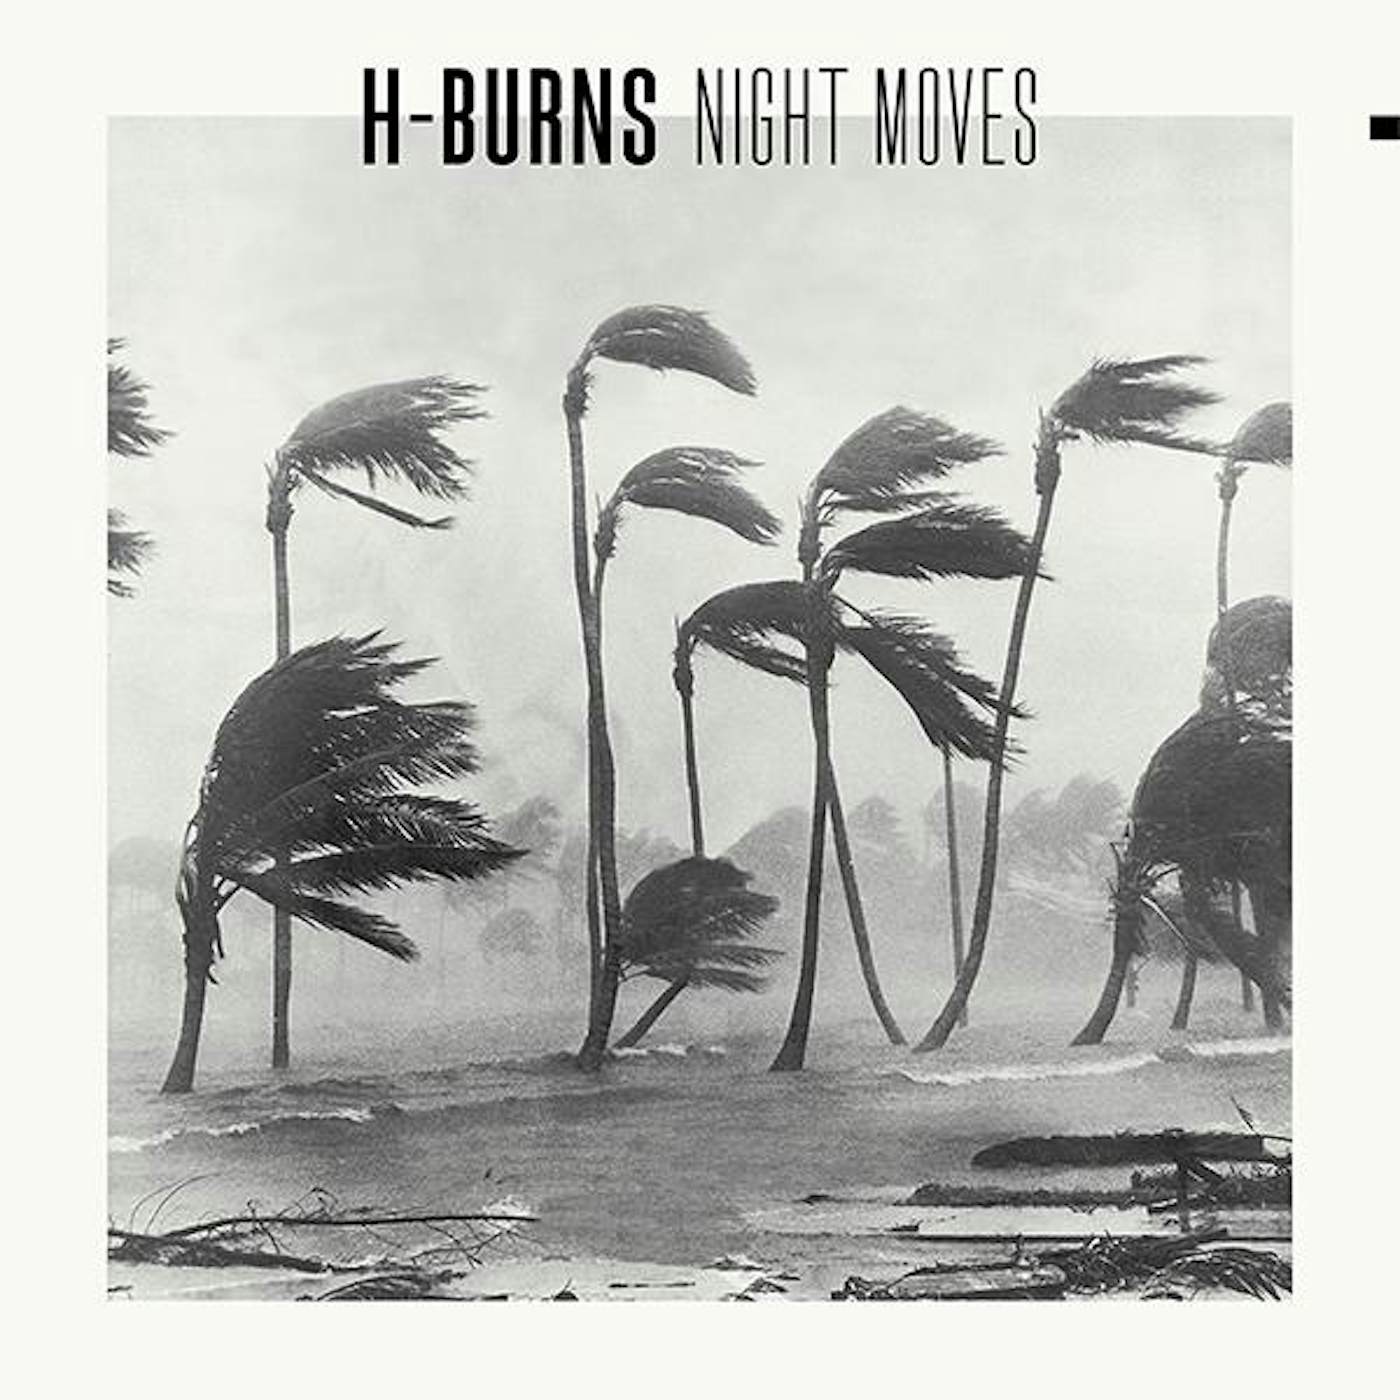 H-Burns Night Moves Vinyl Record